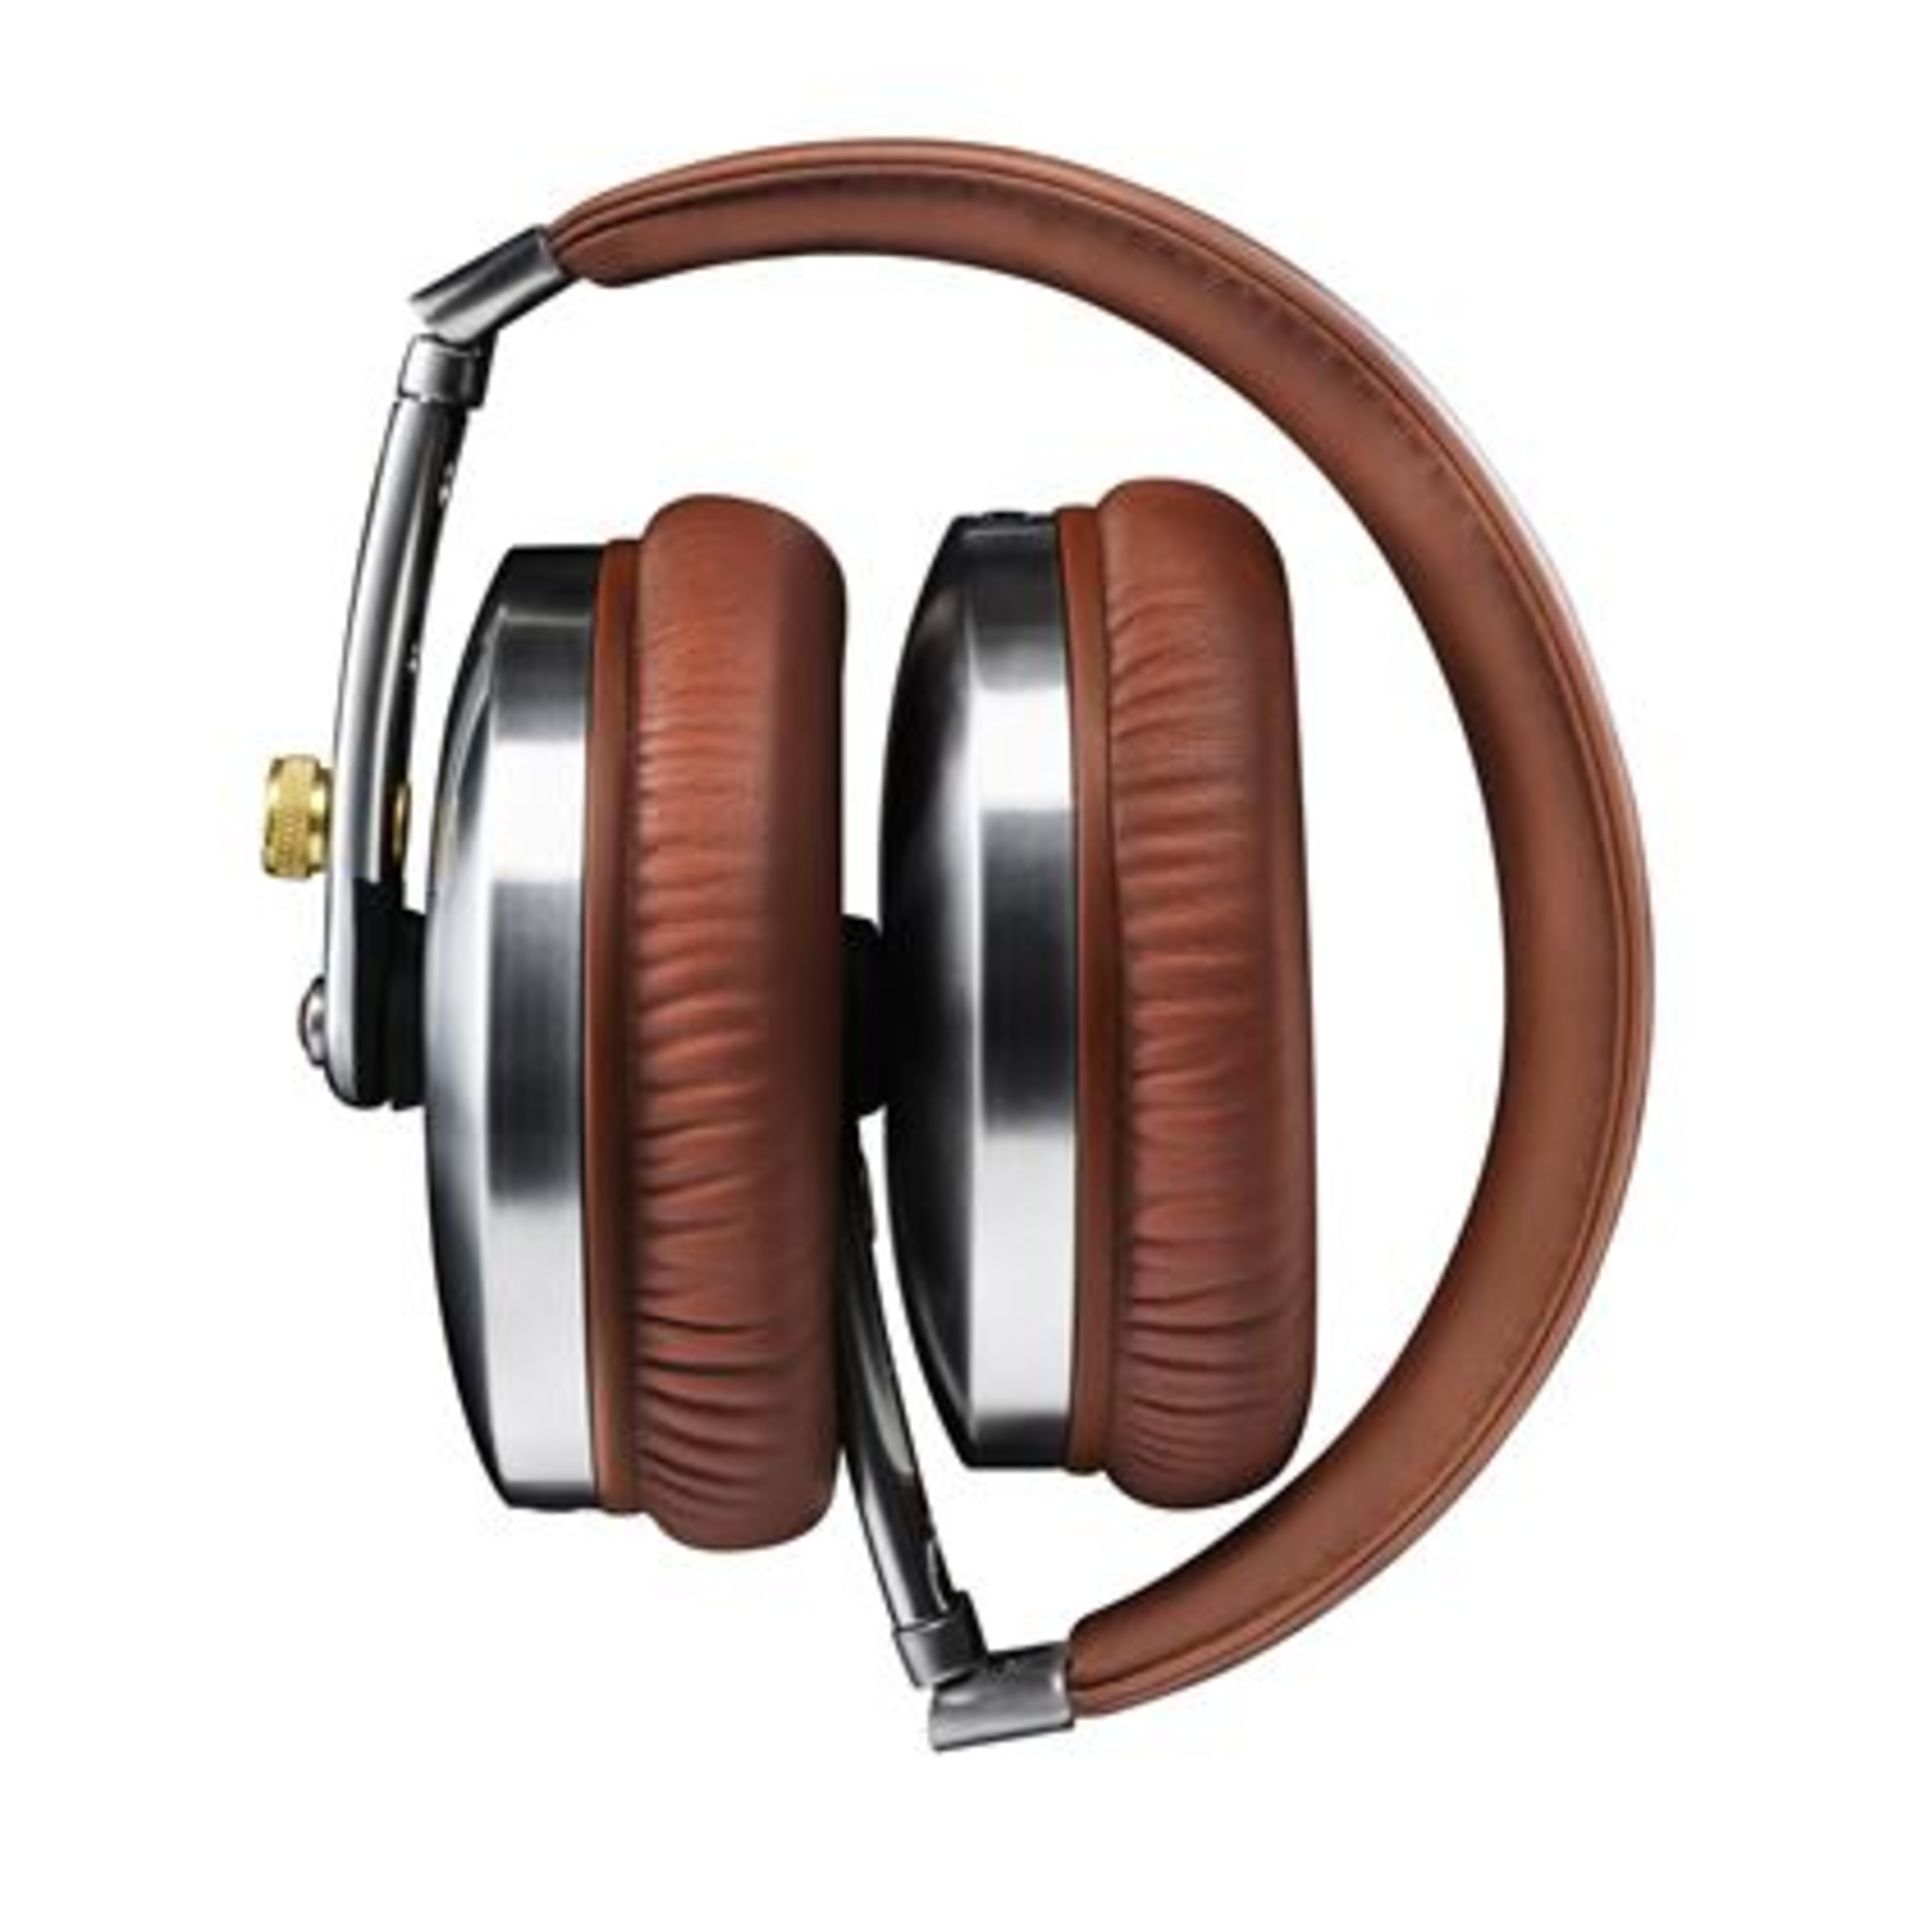 V Brand New Ted Baker Rockall High Performance Folding Over Ear Headphones Brown/Silver Brushed - Image 3 of 3